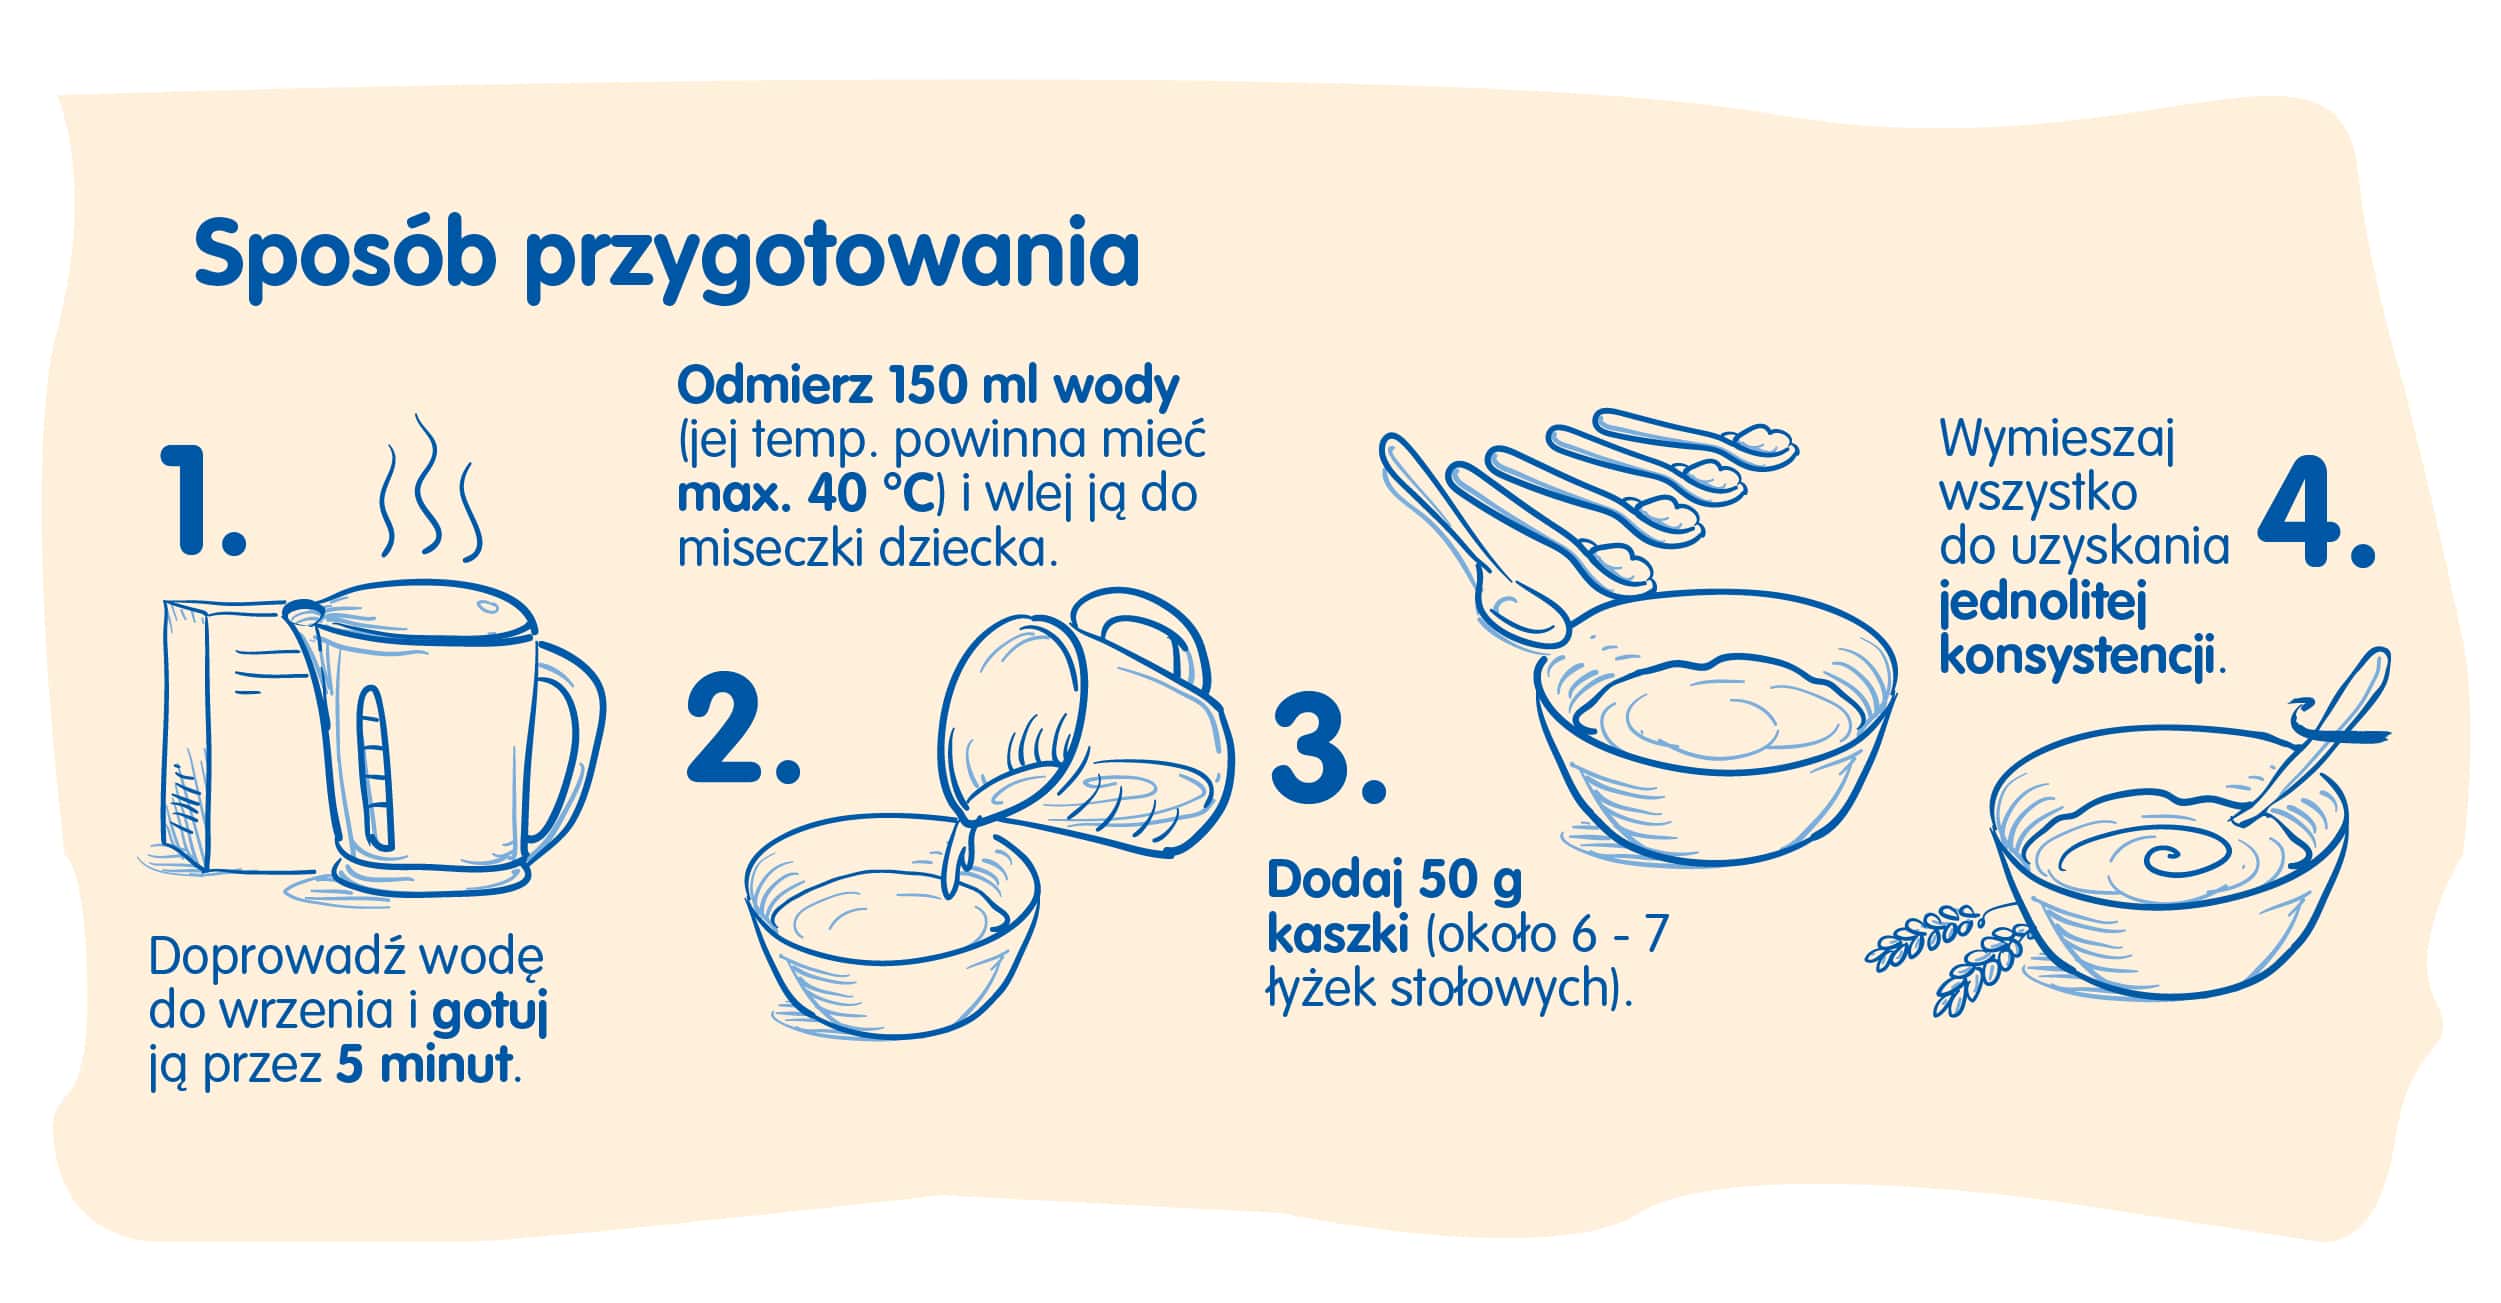 how to prepare porridge